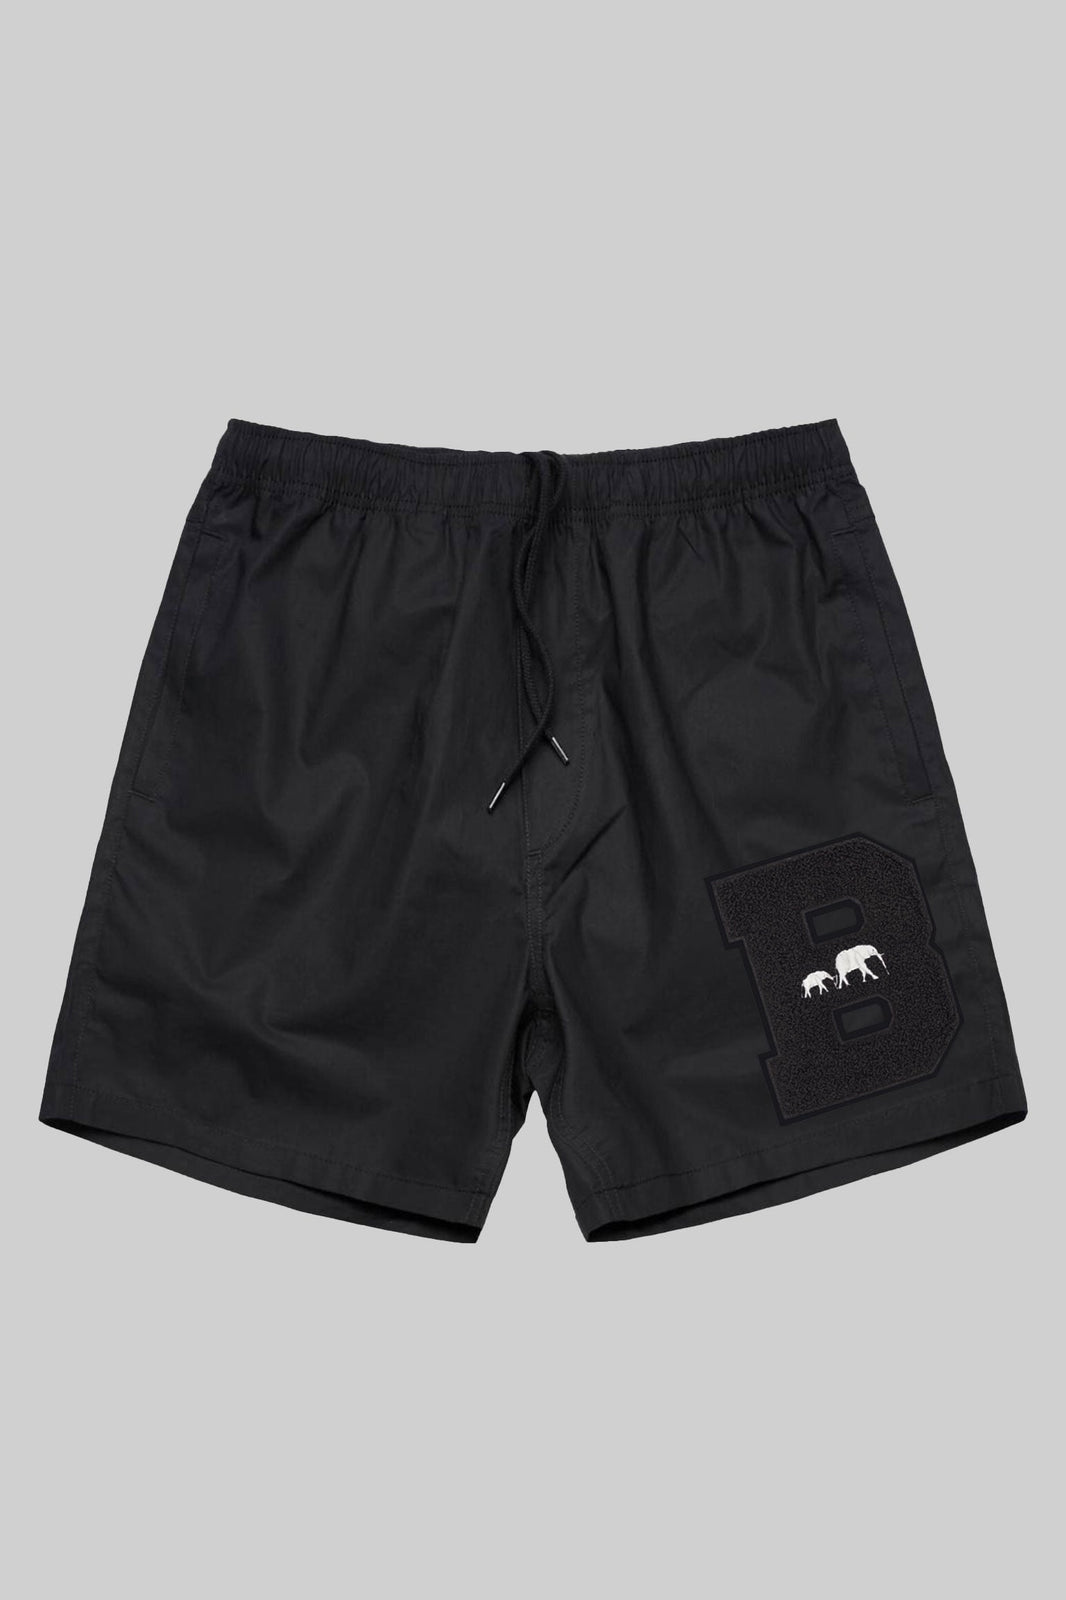 Restock! Lenox Original Shorts(Black/Black/White elephant)